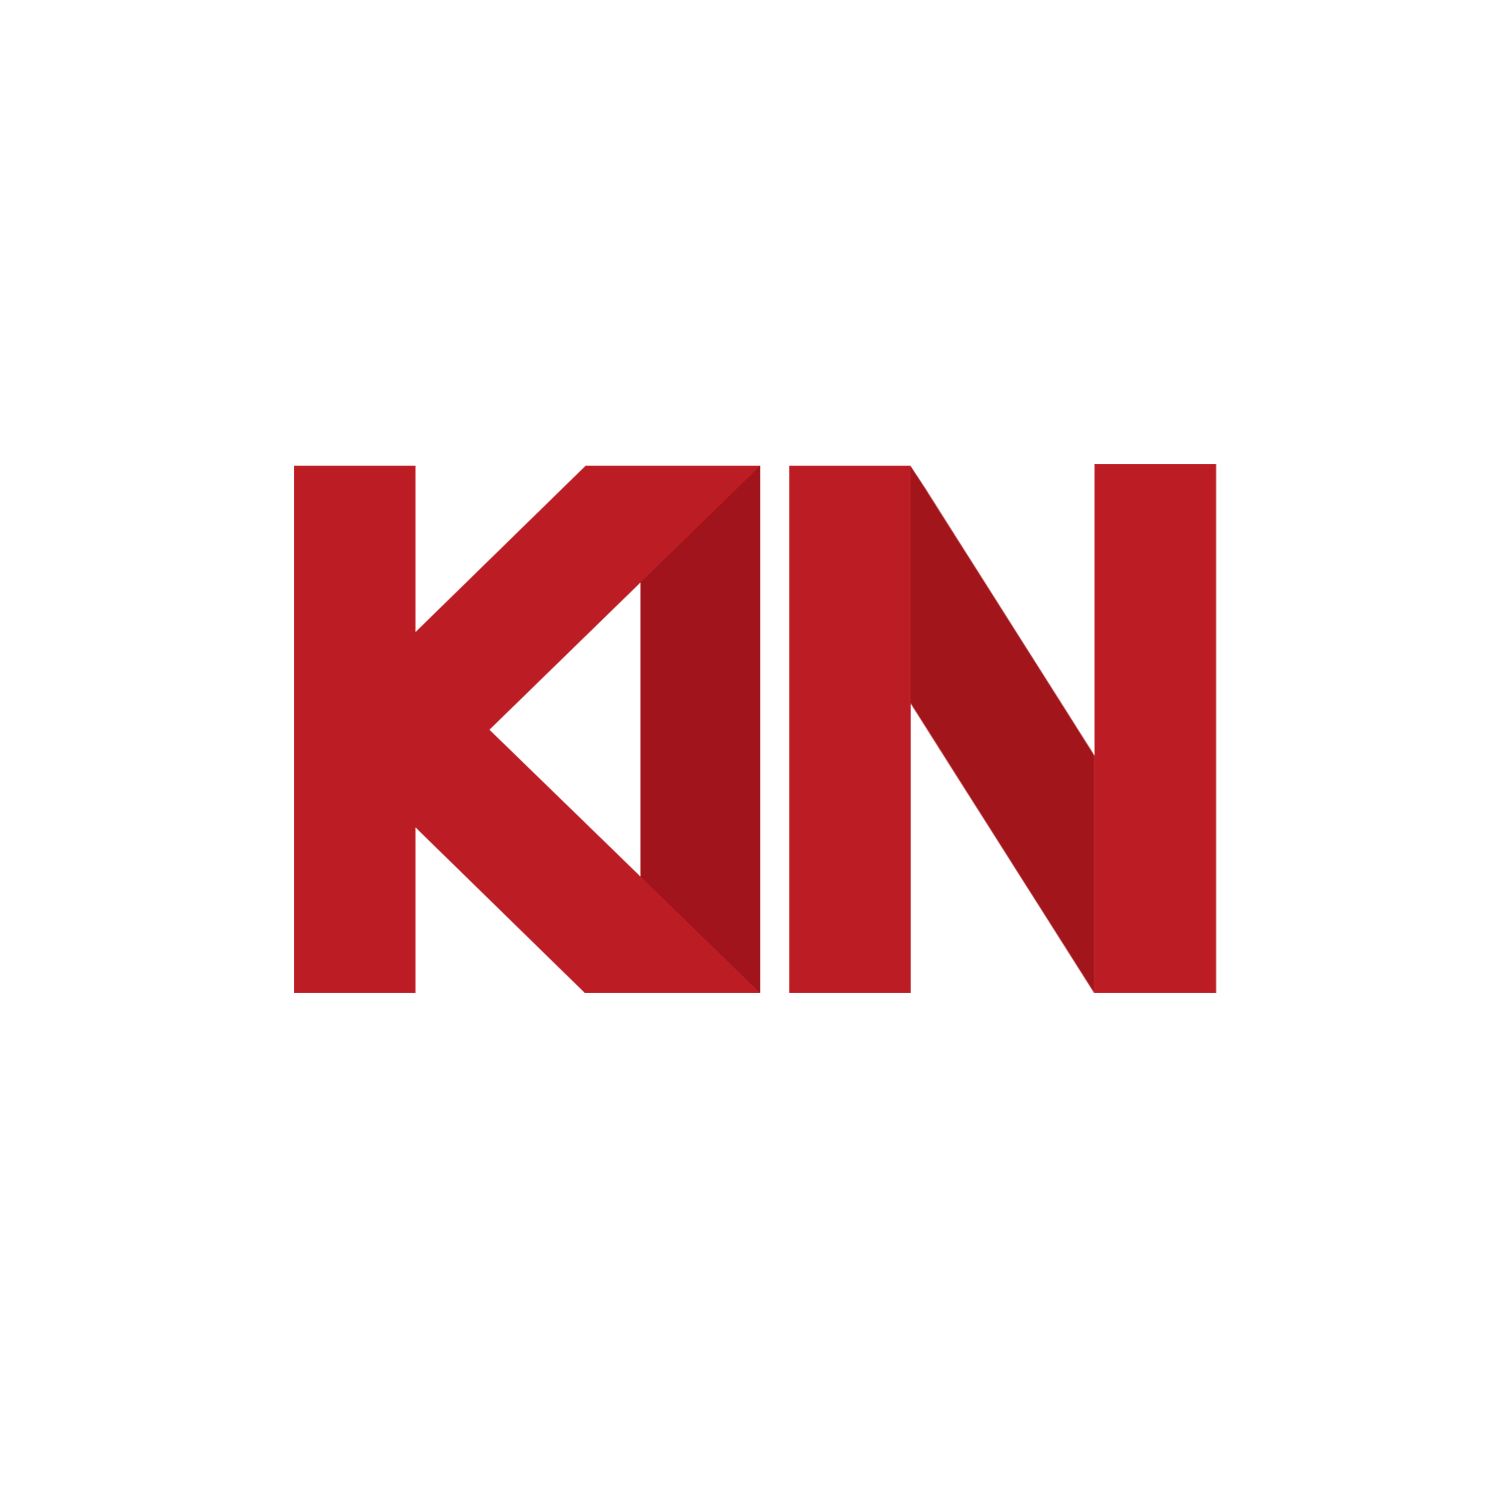 Kin Logo - Serious, Conservative Logo Design for Kin by OddLaww | Design #16699952